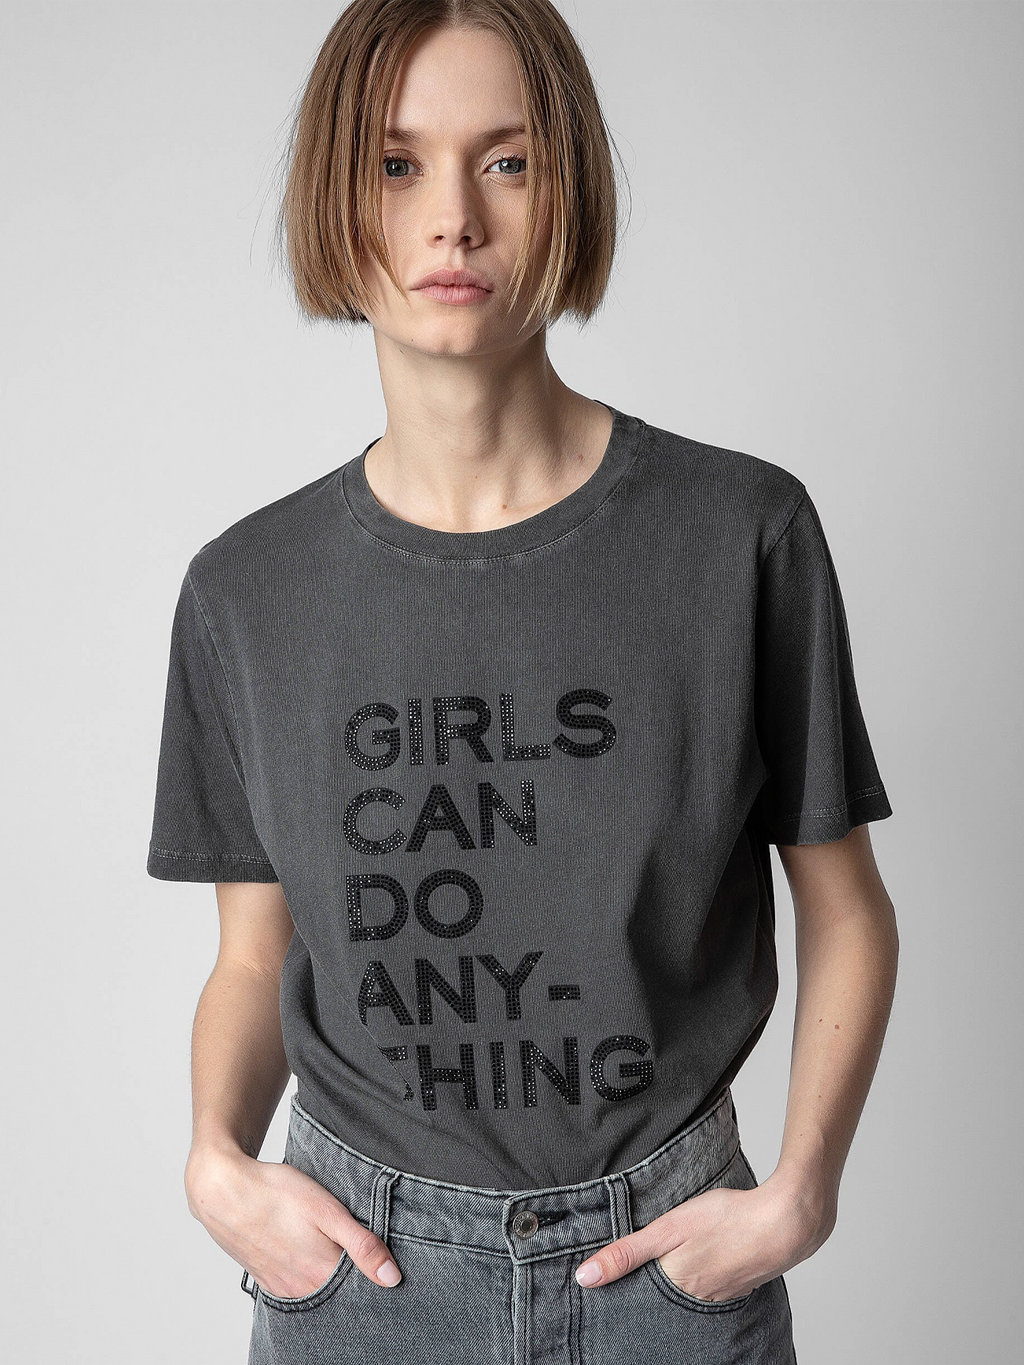 Bella Girls Can Do Anything T-Shirt